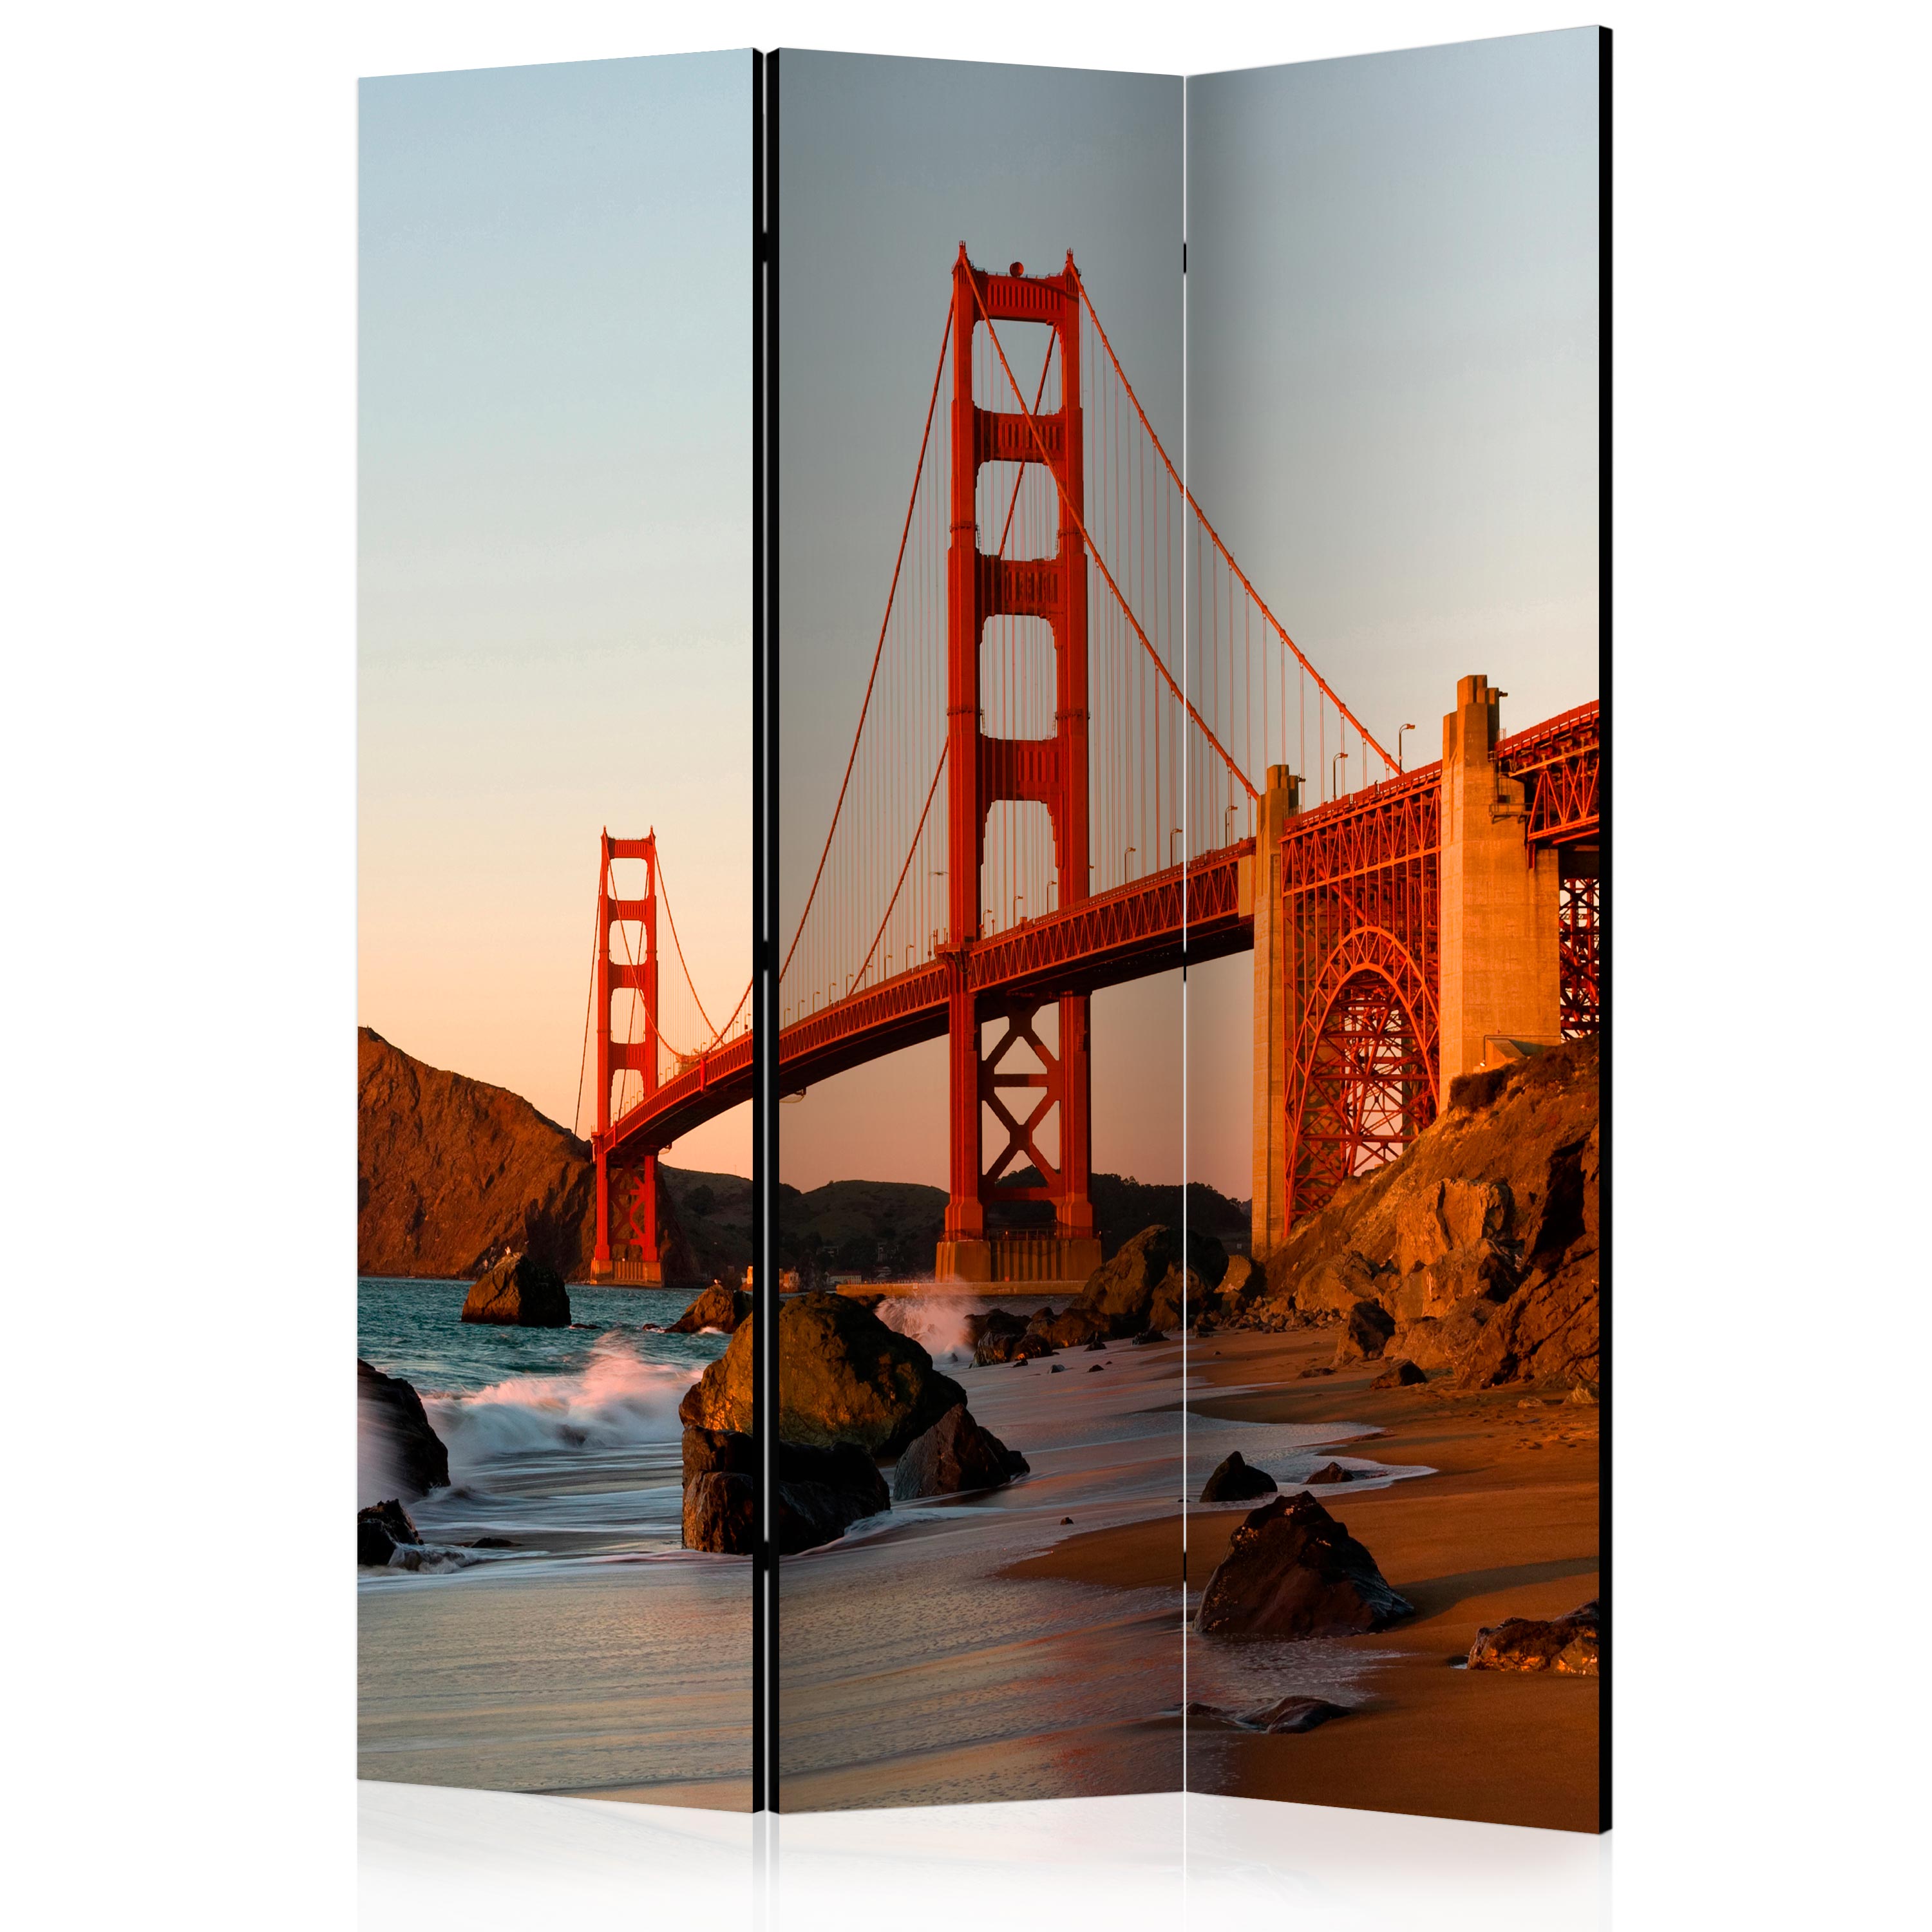 Paravan Artgeist, Golden Gate Bridge sunset, San Francisco [Room Dividers] - 1.35 x 1.72 m